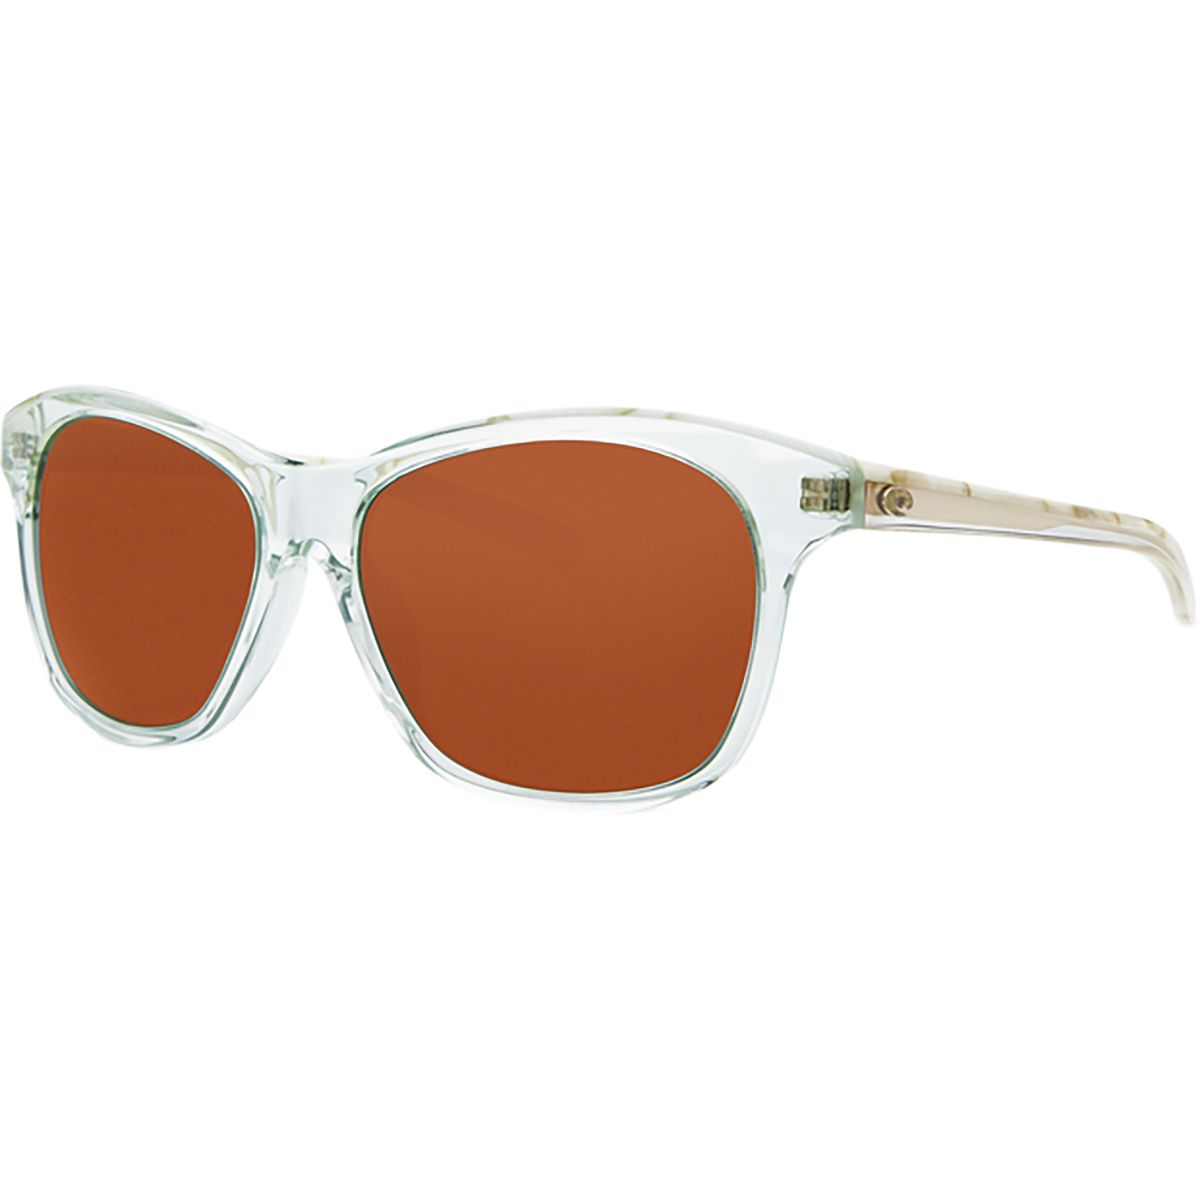 Costa Sarasota 580G Polarized Sunglasses - Women's